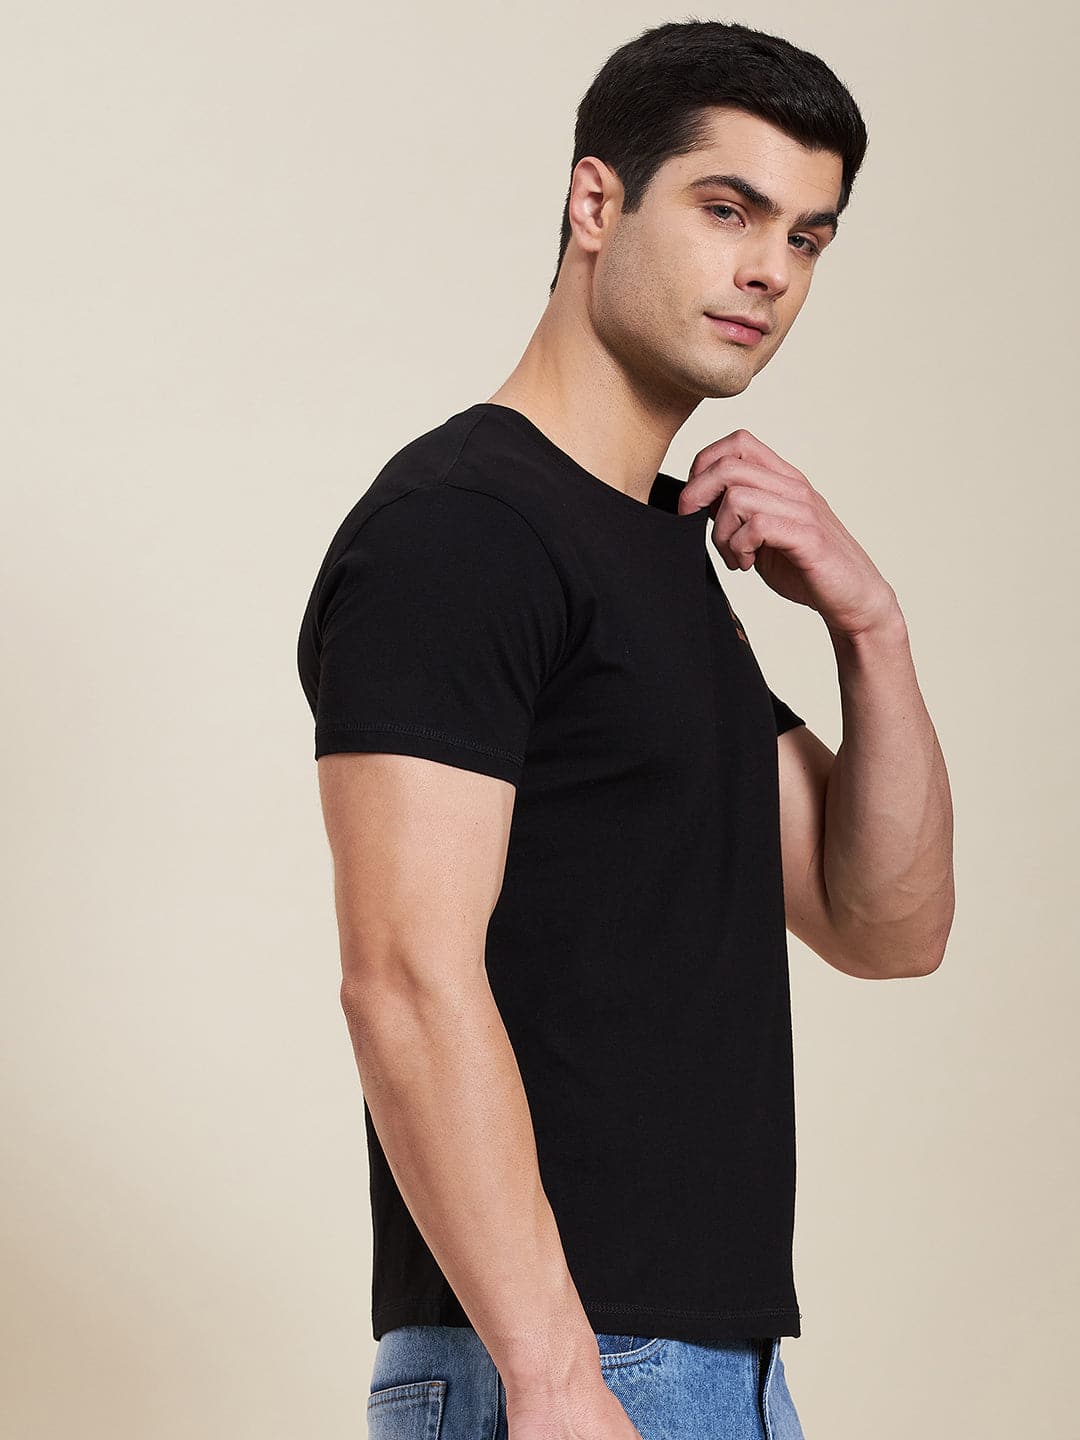 Men's Black Slim Fit MASCLN ORIGINAL T-Shirt - LYUSH-MASCLN